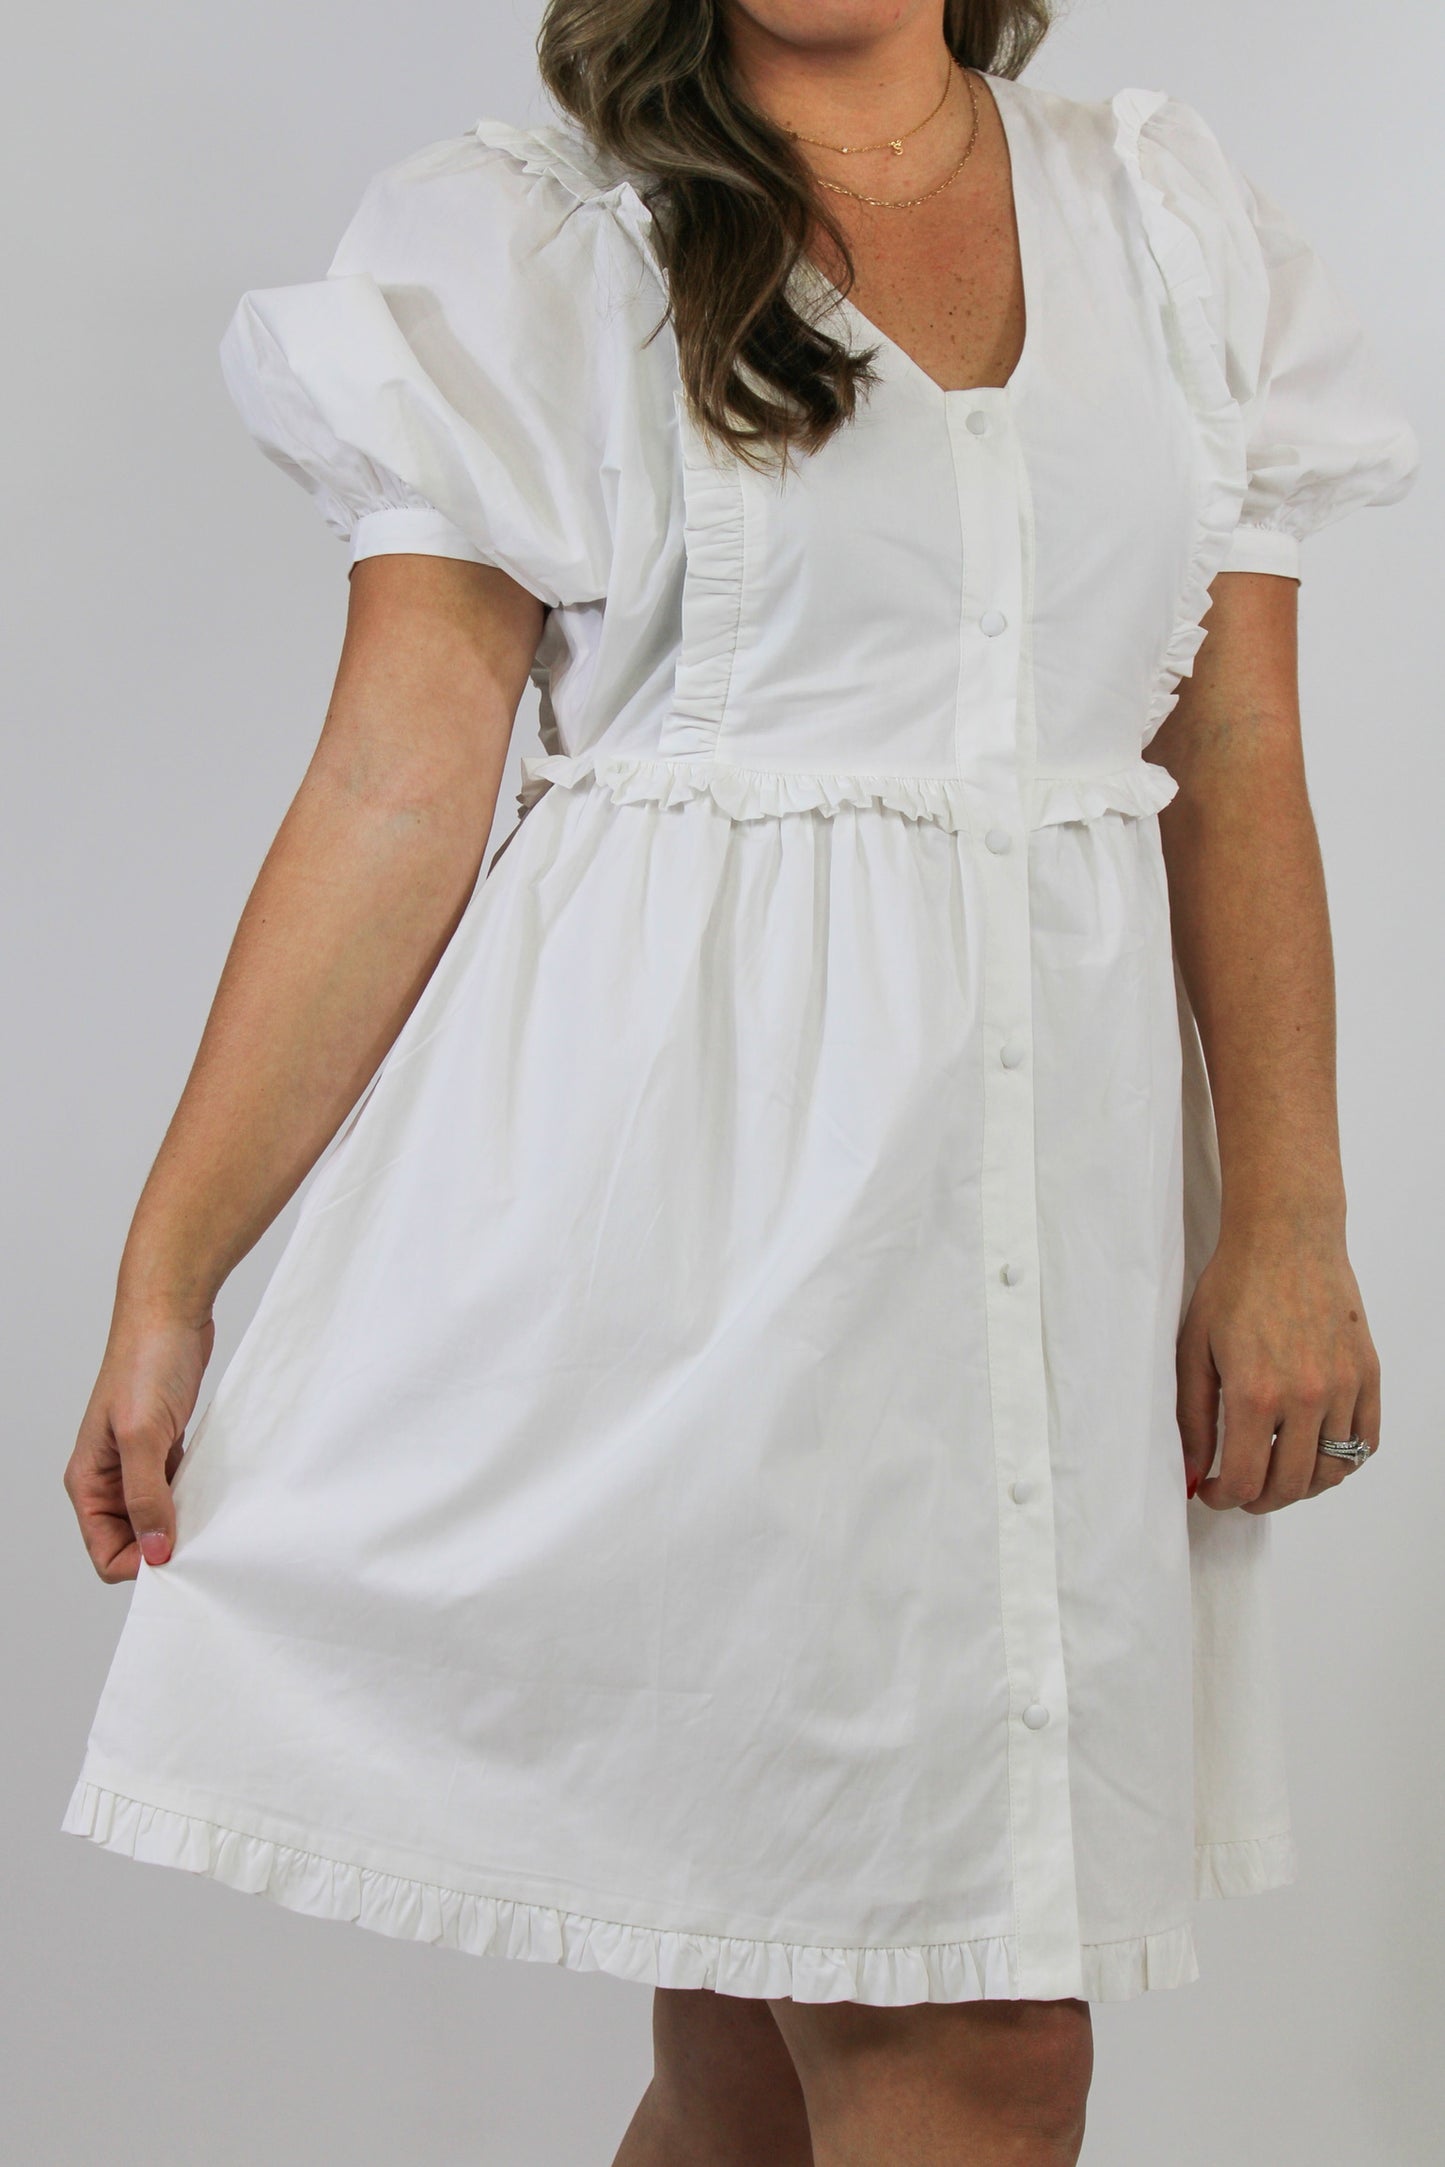 Sweetie White Mini Dress